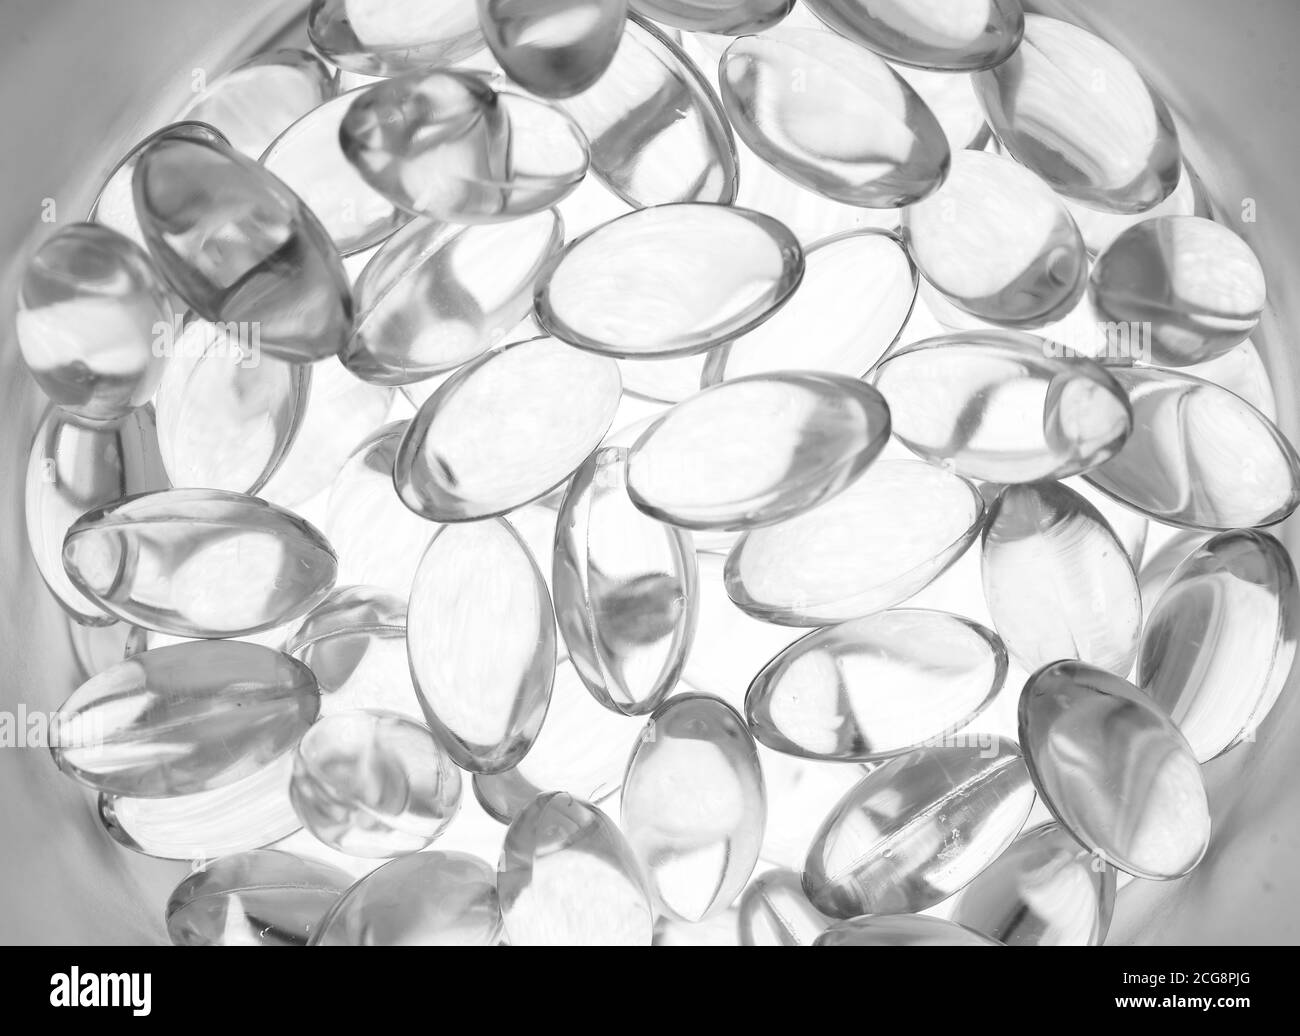 Omega 3 oil capsule, Health supplement Stock Photo